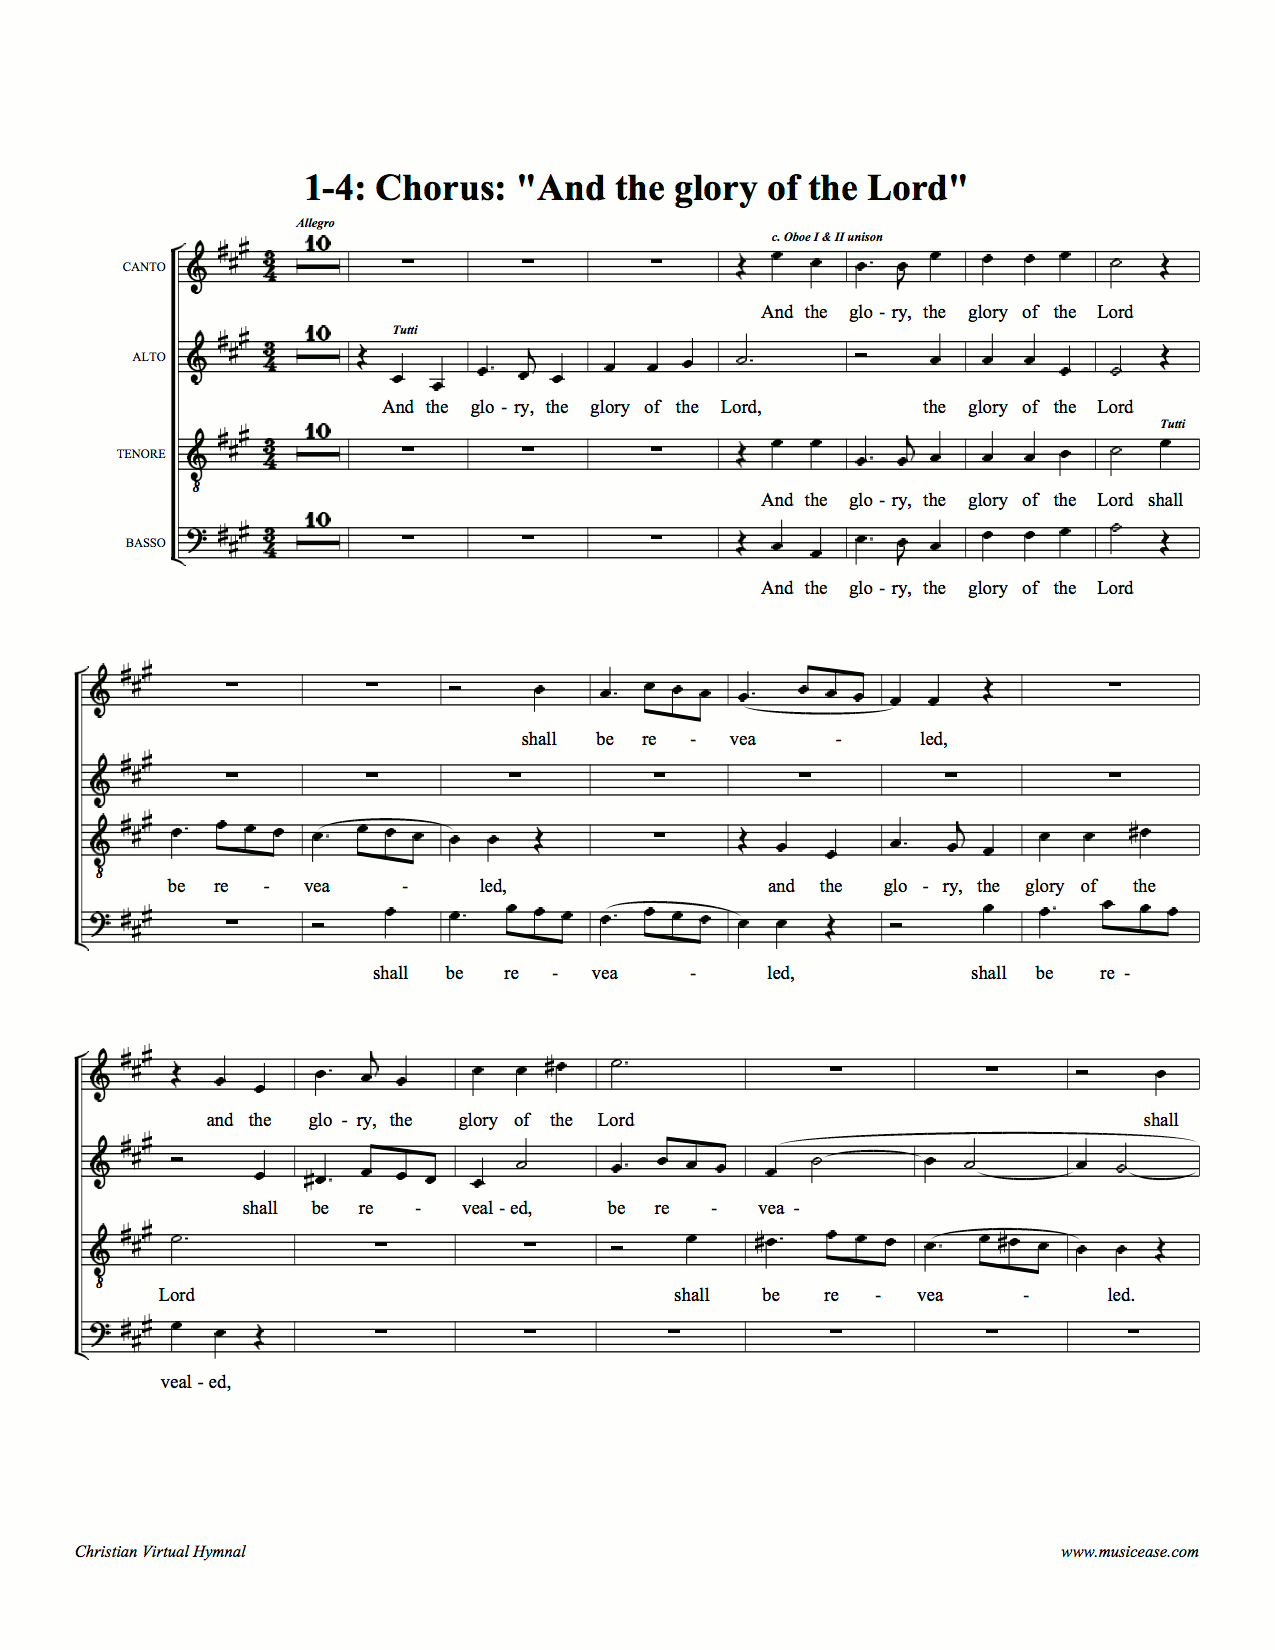 Extraction of Chorus